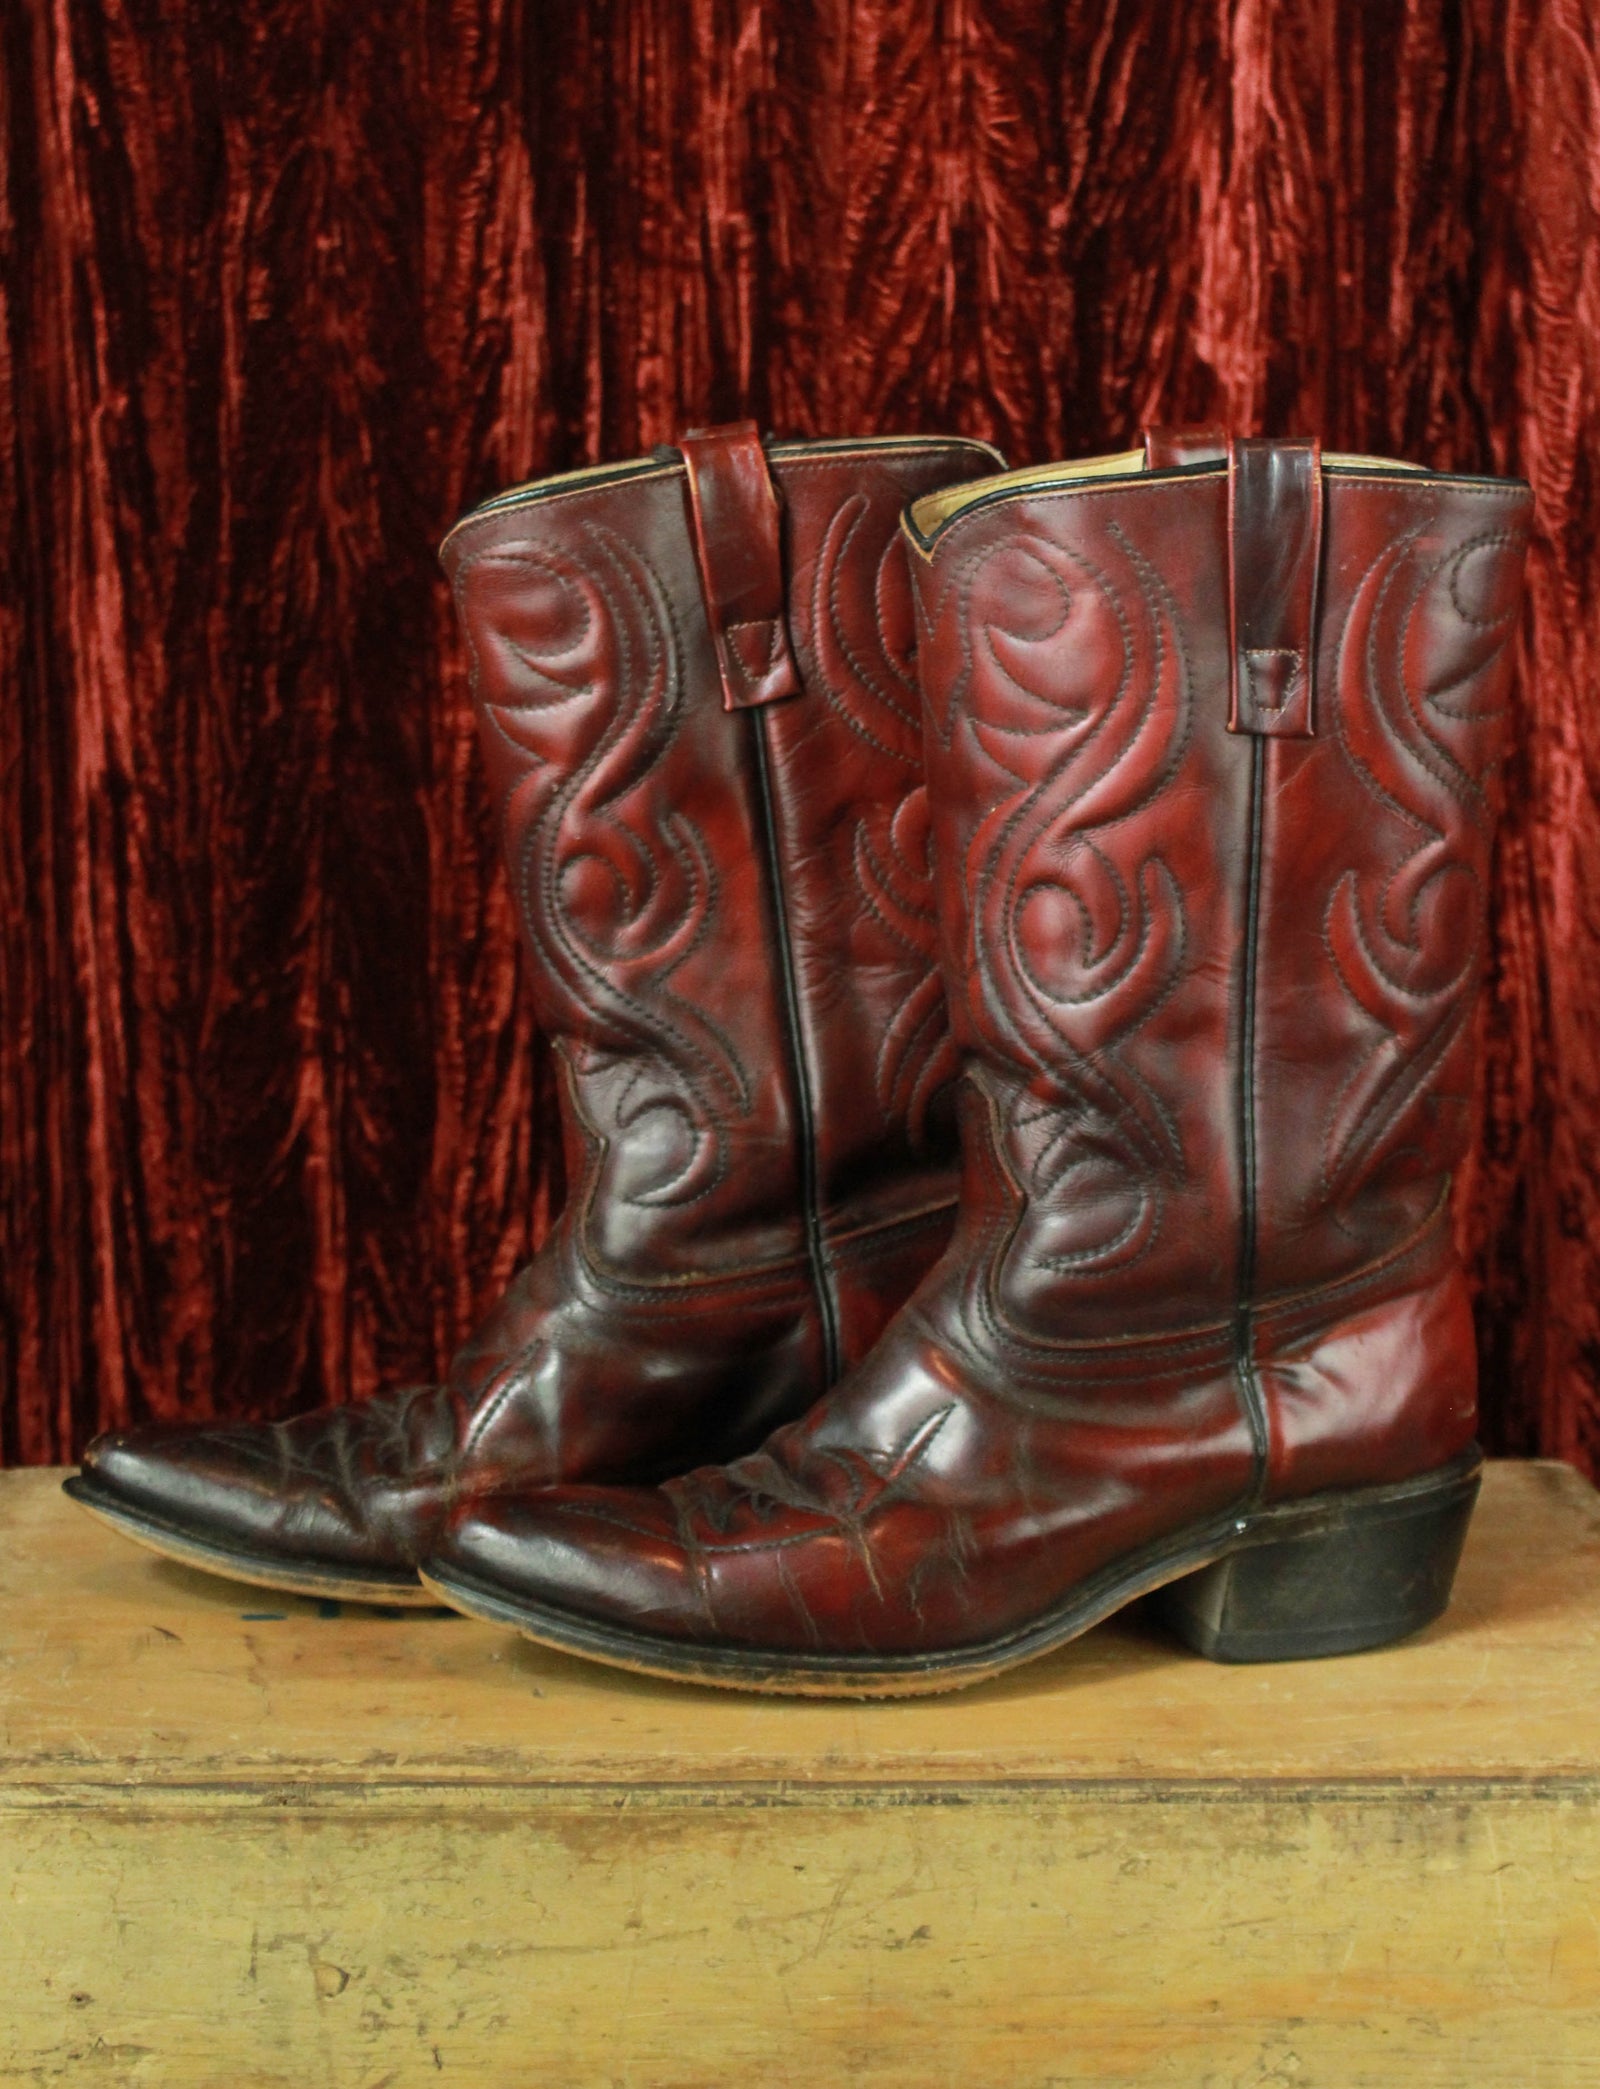 mens black leather cowboy boots